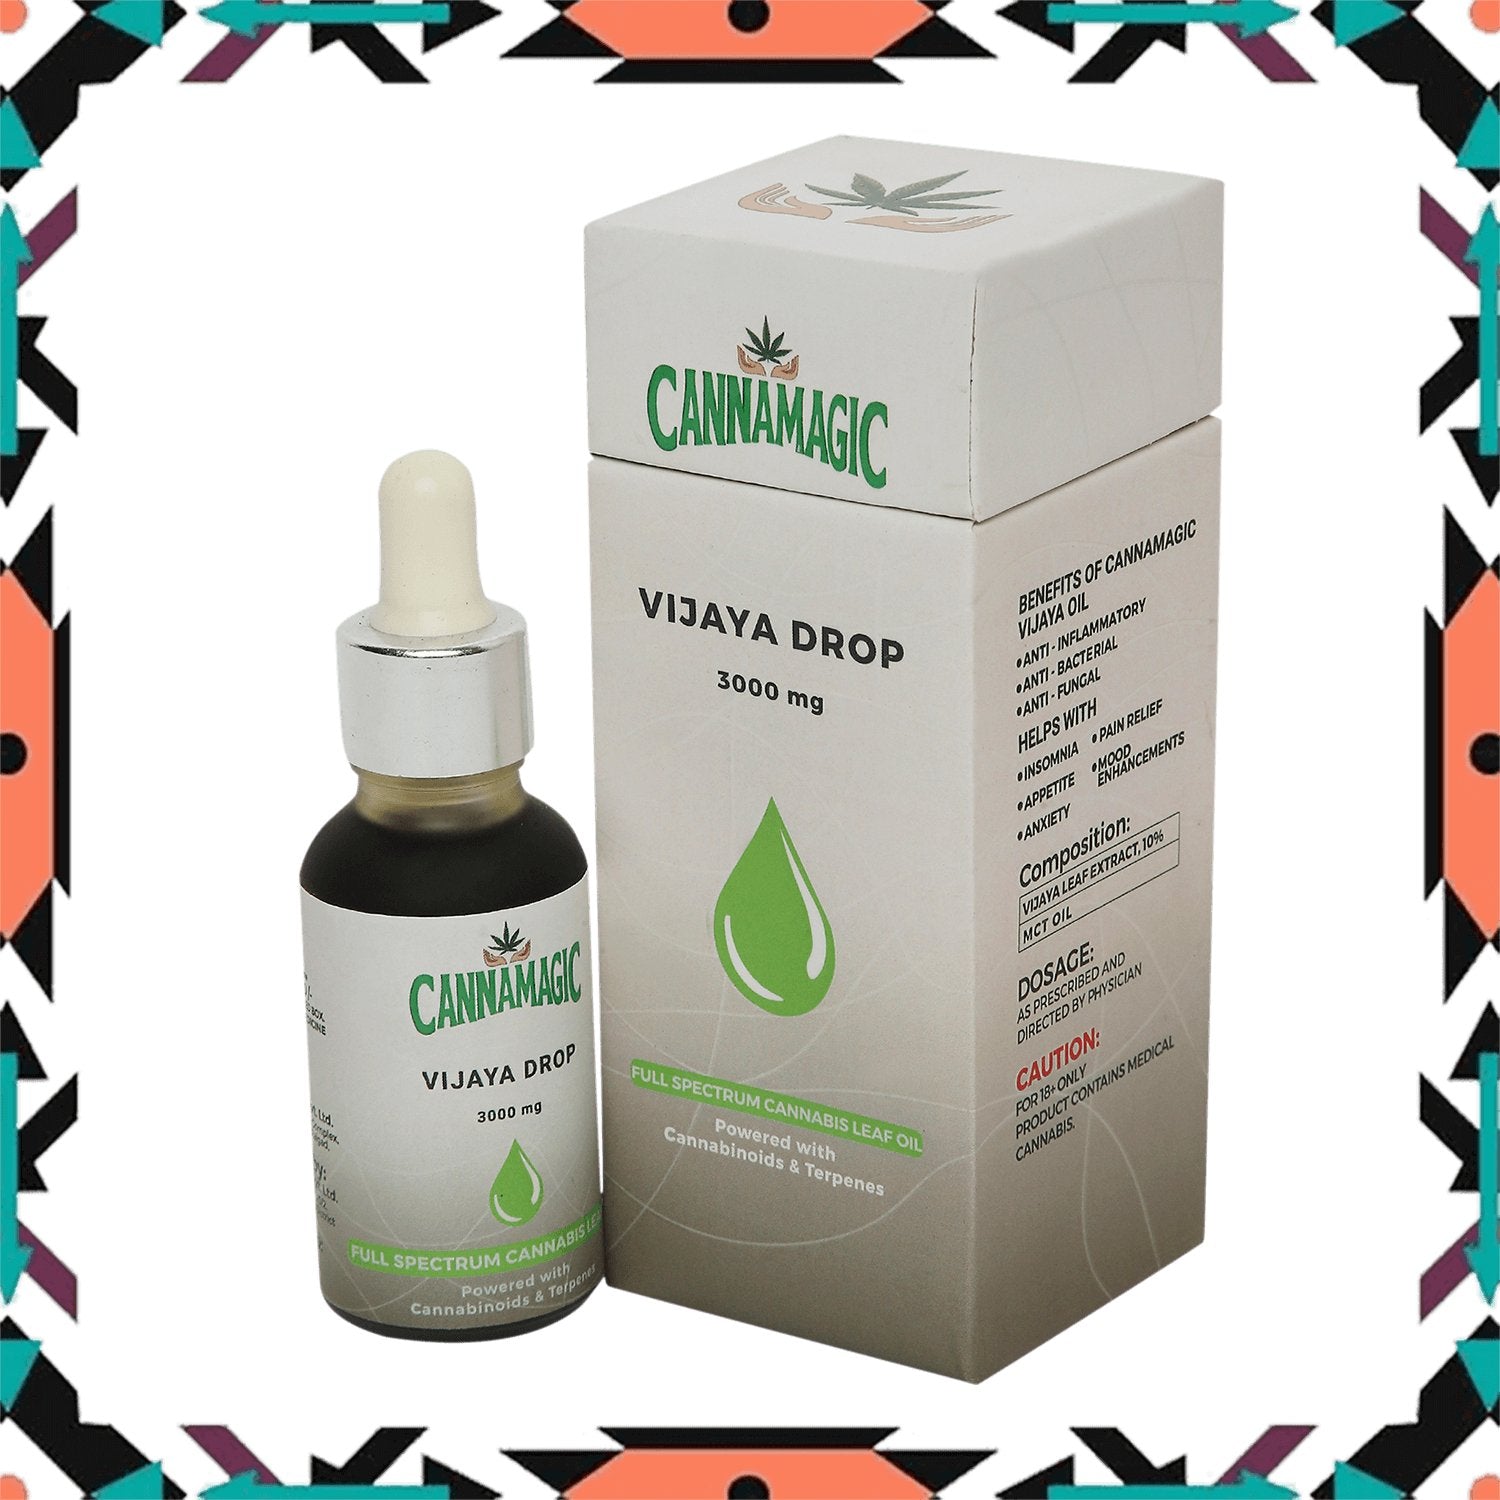 Cannamagic - Vijaya Drop (3000 mg) - Full Spectrum Cannabis Leaf Oil - CBD Store India